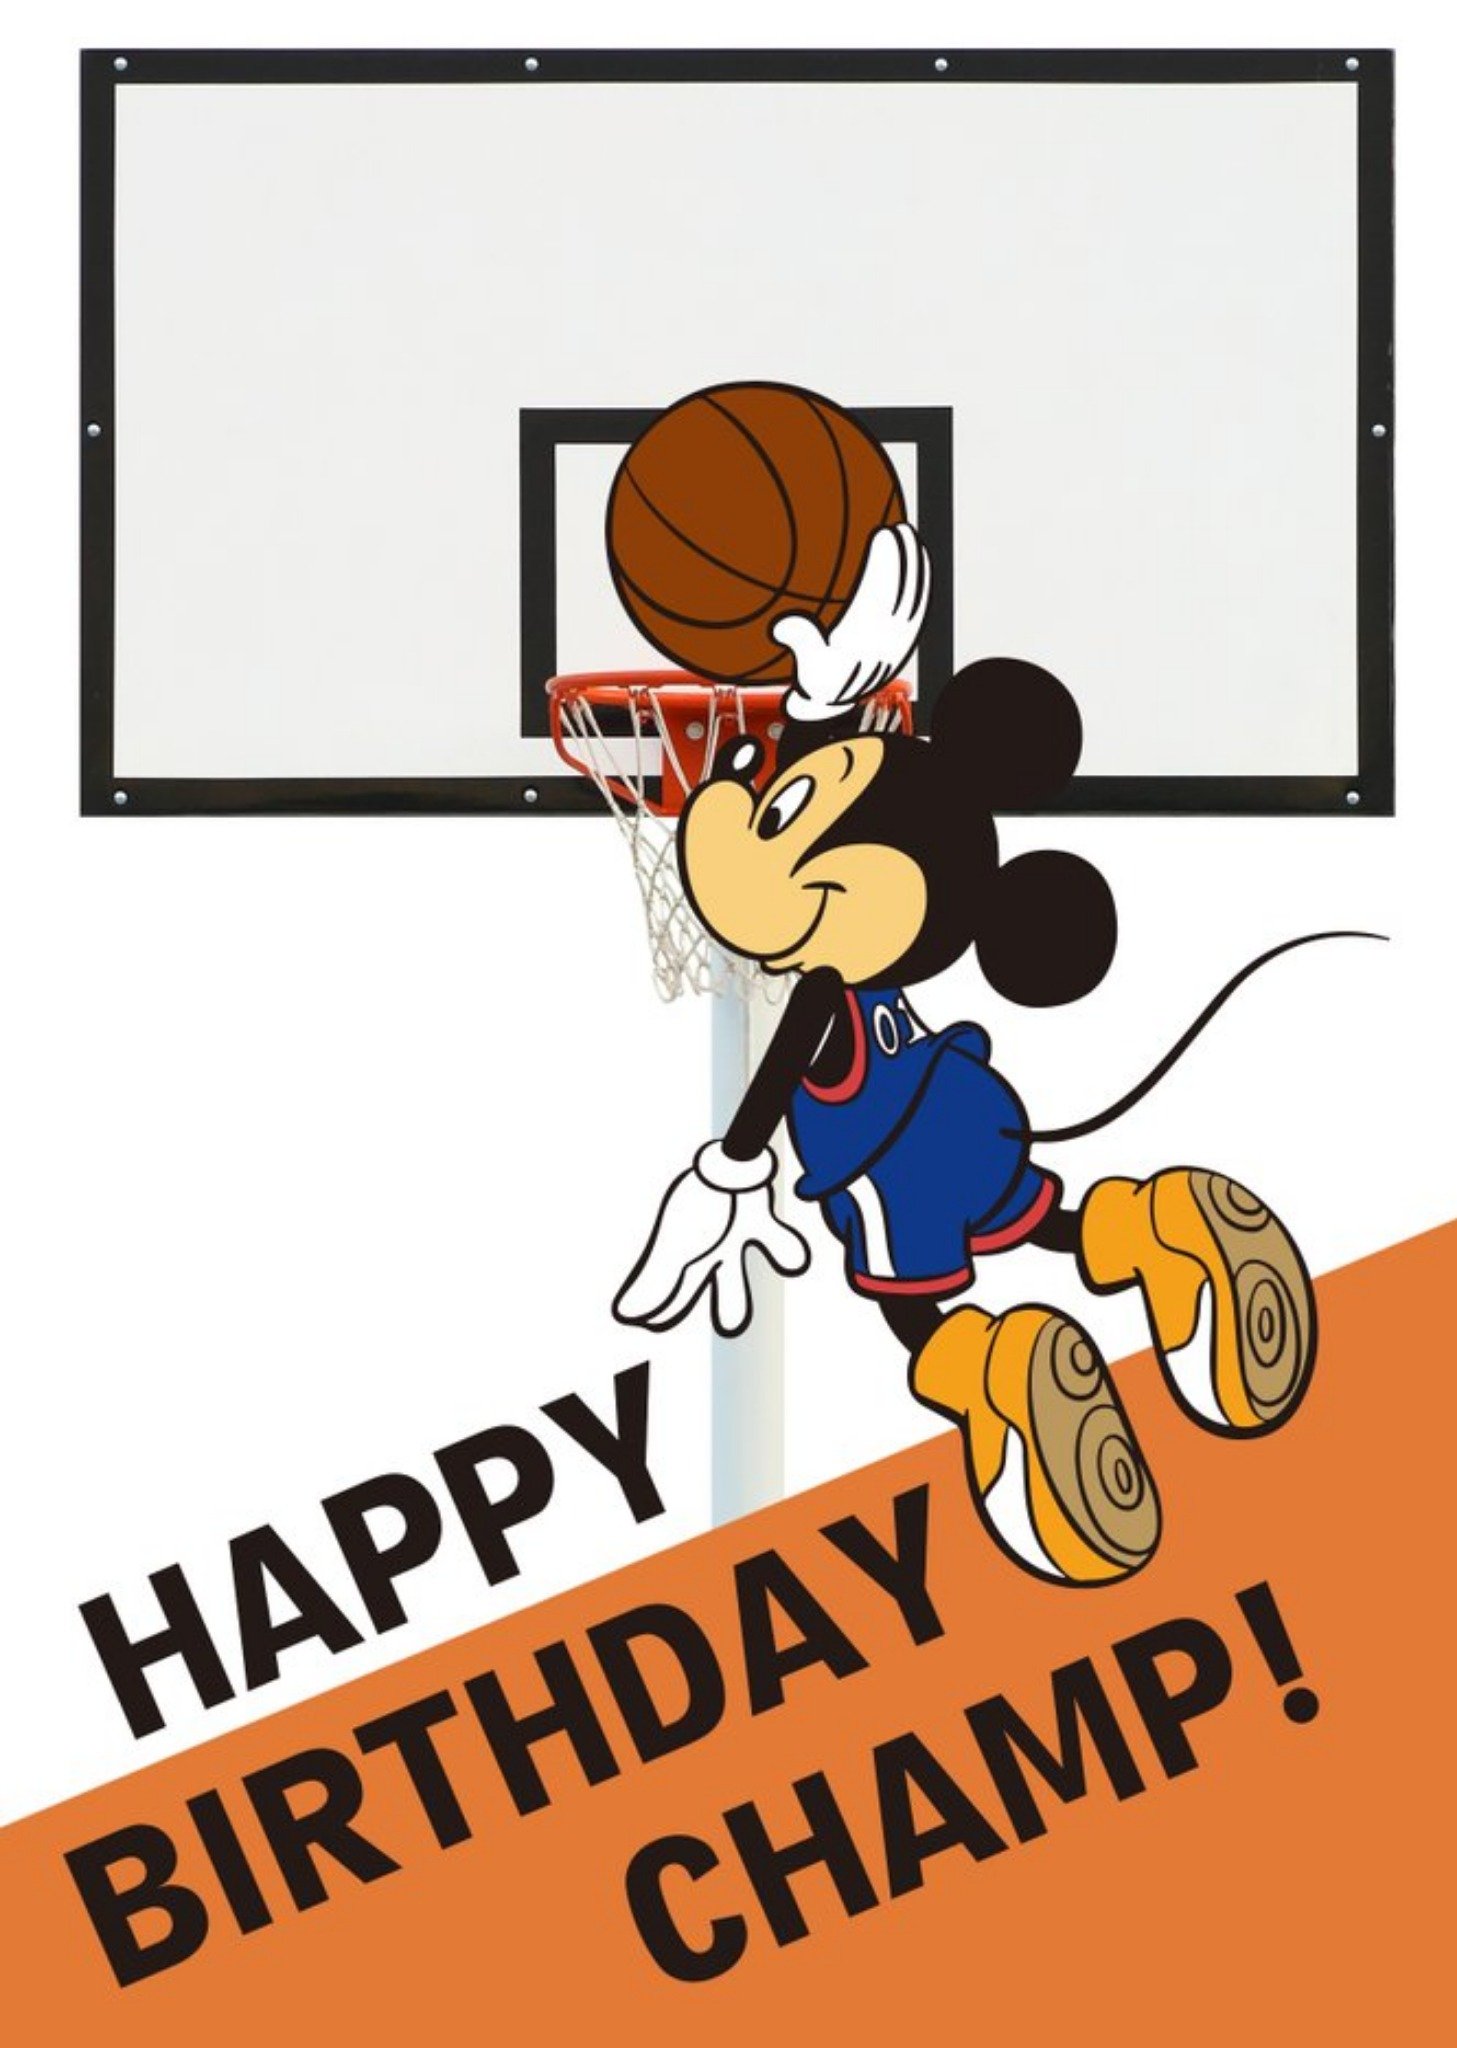 Disney Mickey Mouse Basket Ball Champ Birthday Card Ecard